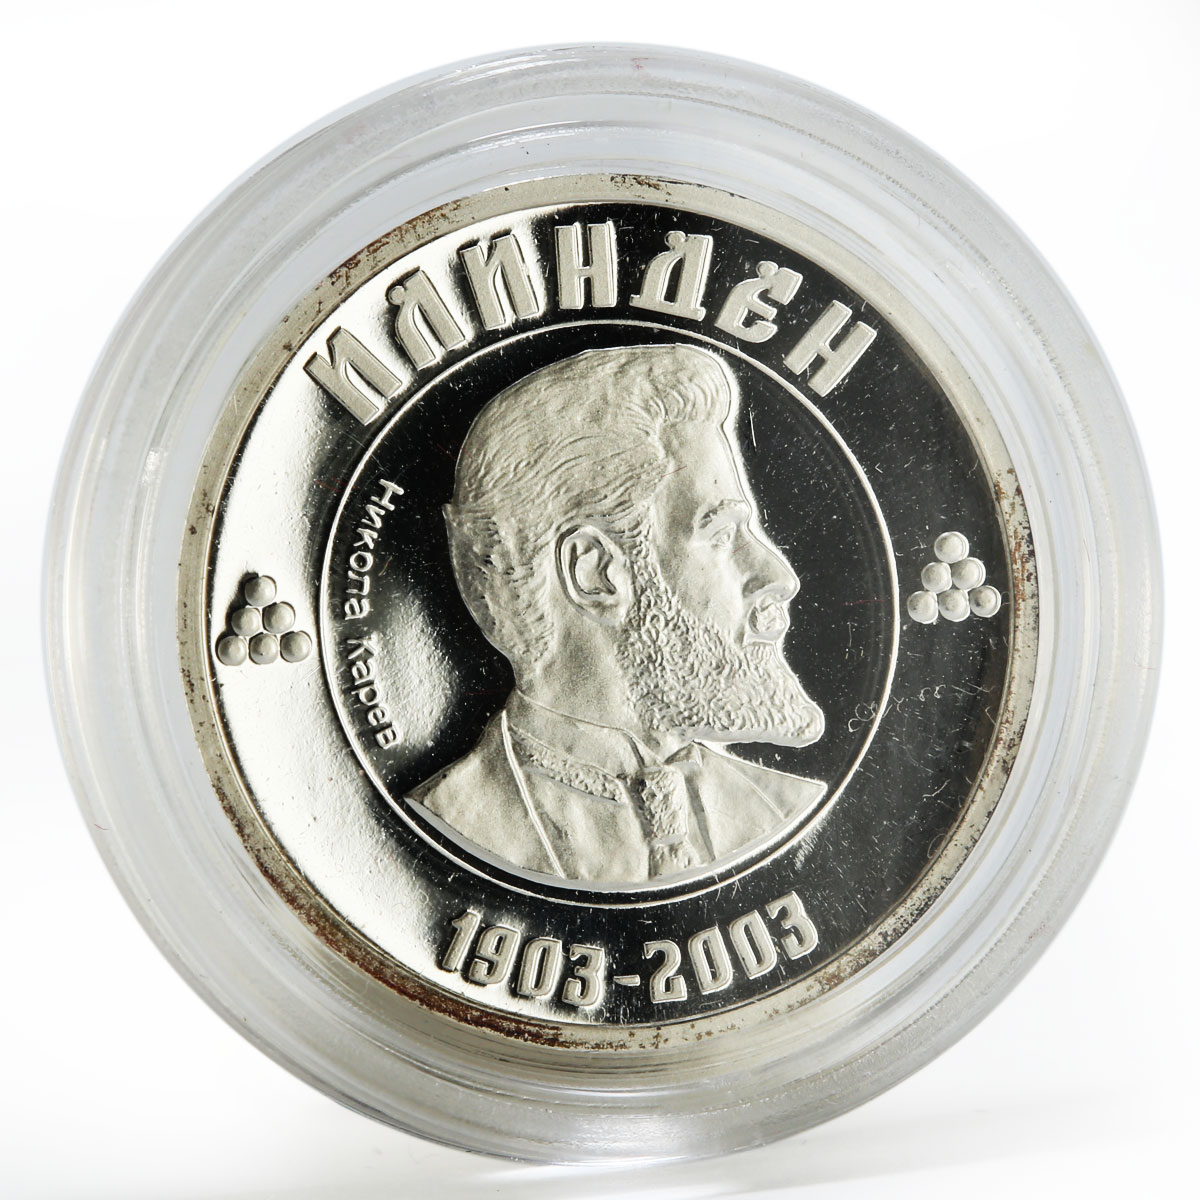 Macedonia 100 denari Nikola Karev revolutionary proof silver coin 2003